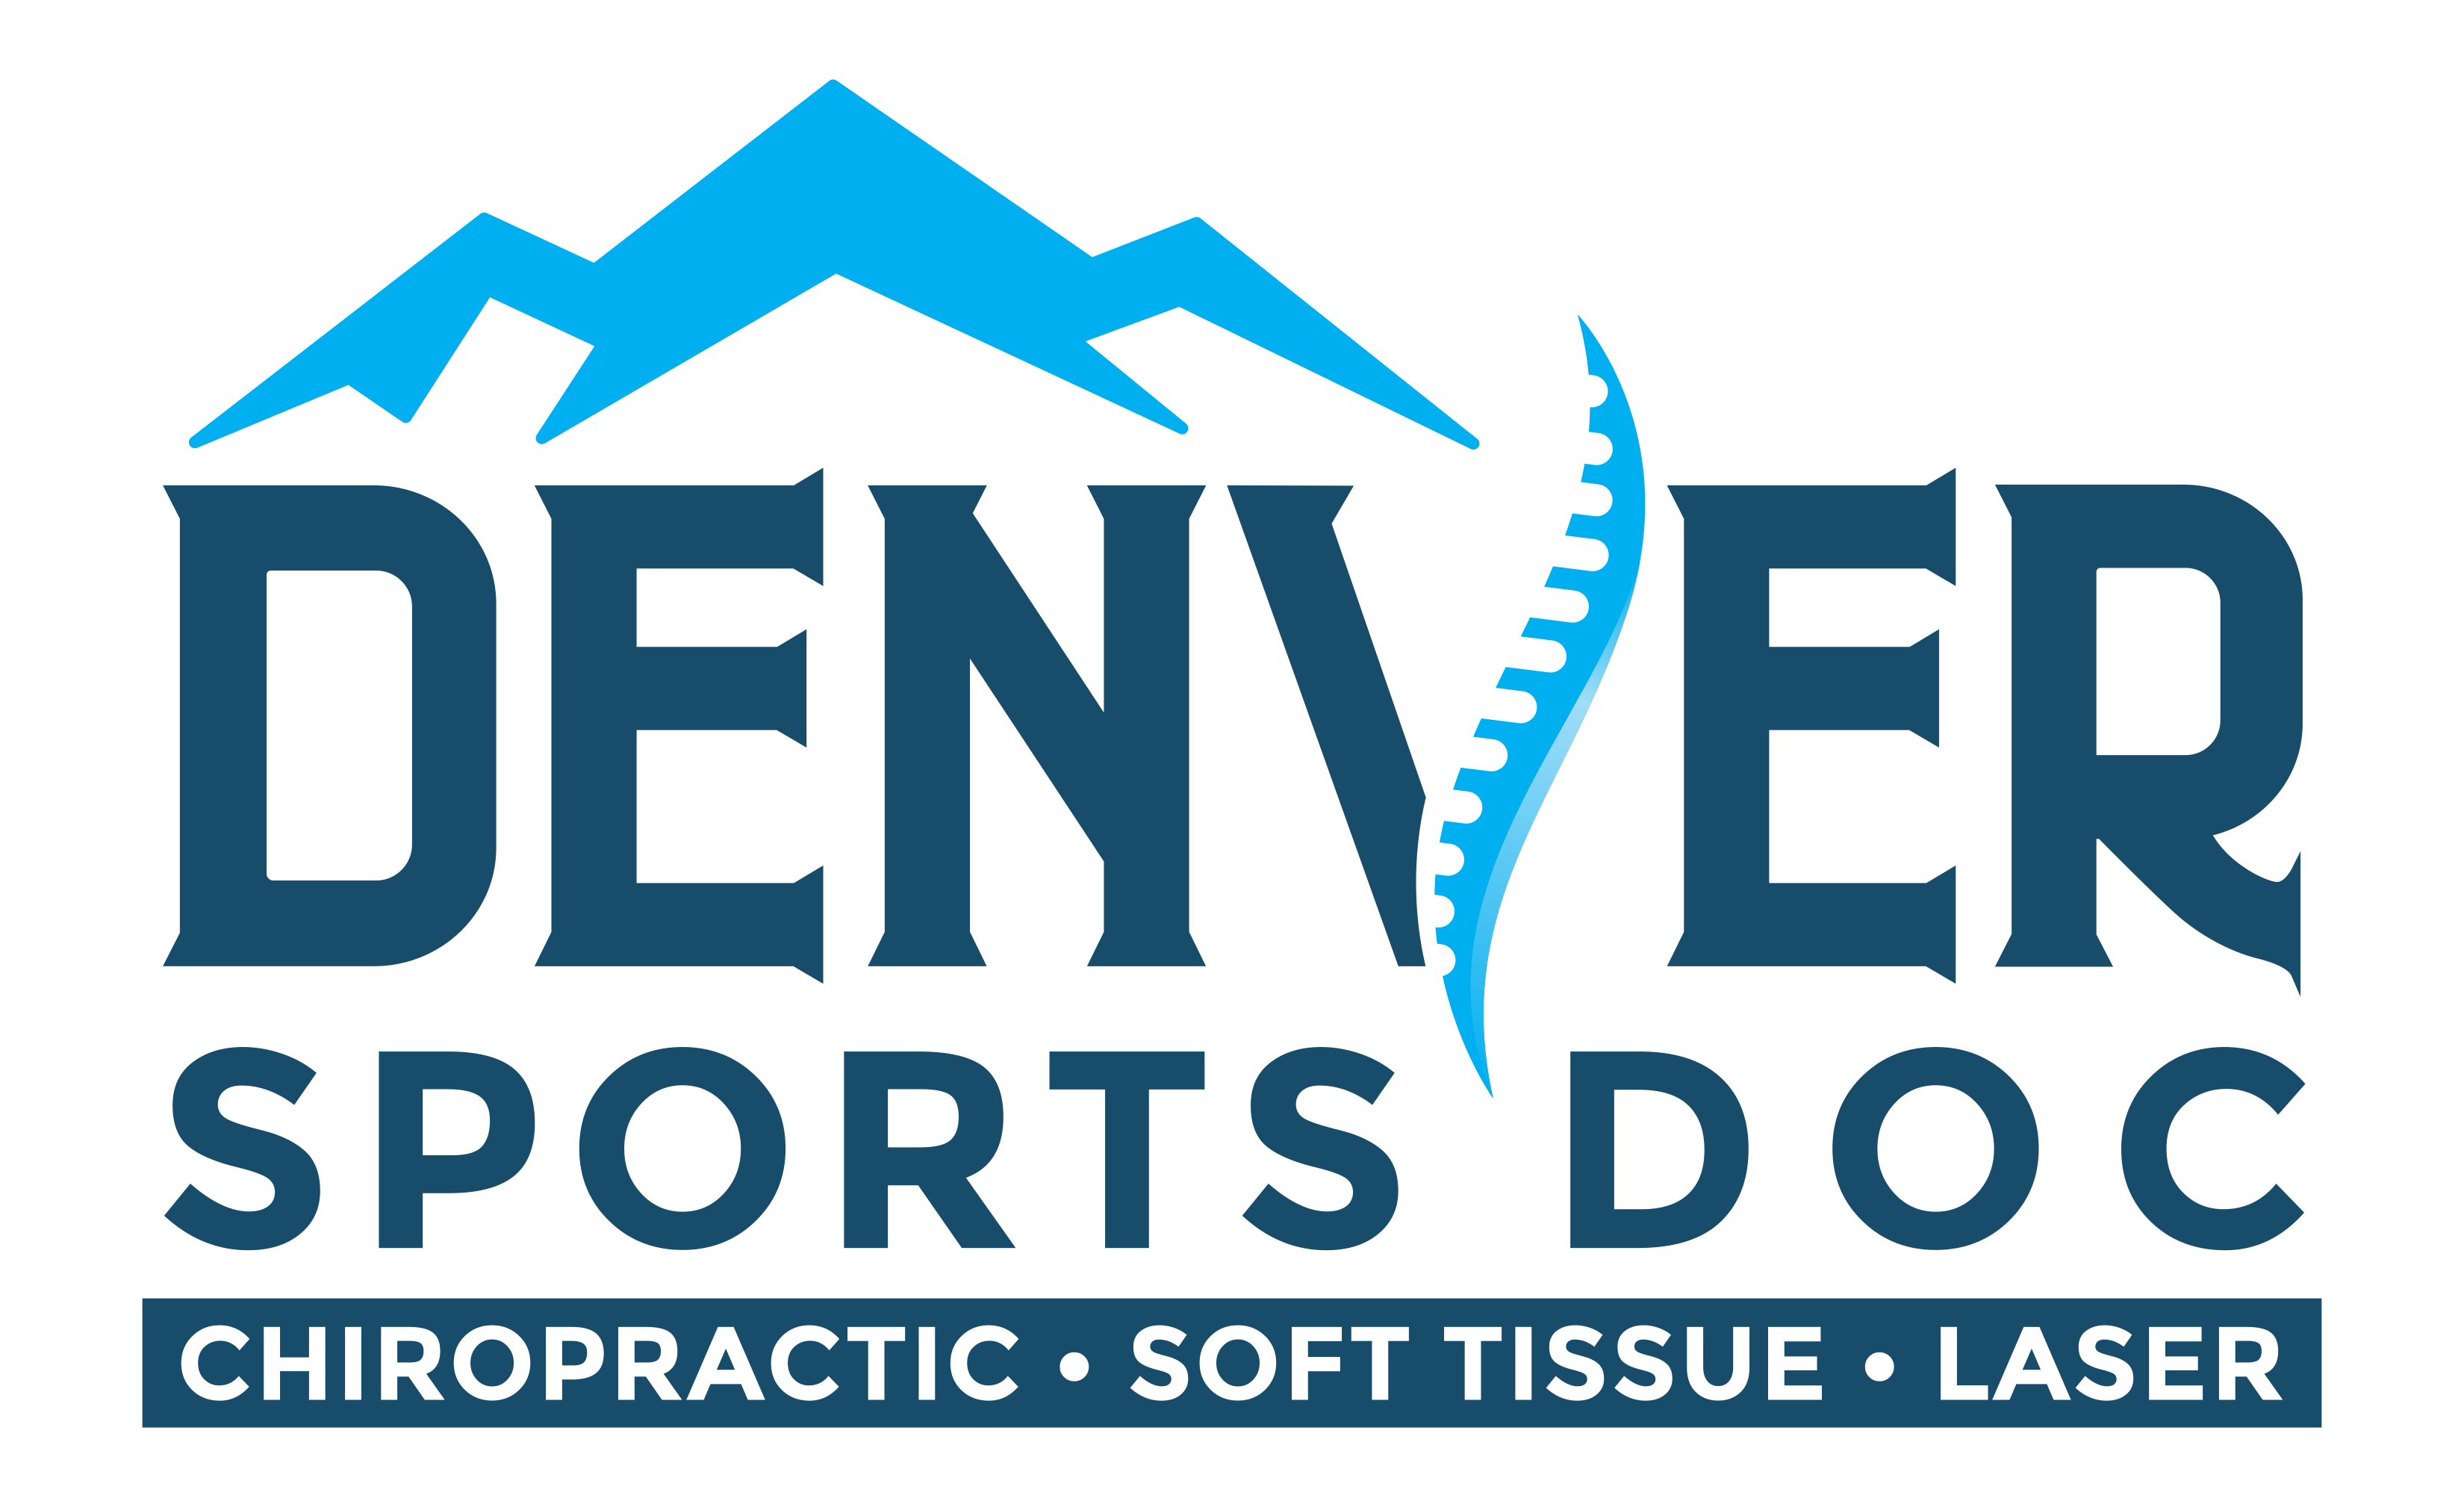 Denver Sport Logo - Denver Sports Doc. Chiropractic • Soft Tissue • Laser in Thornton, CO